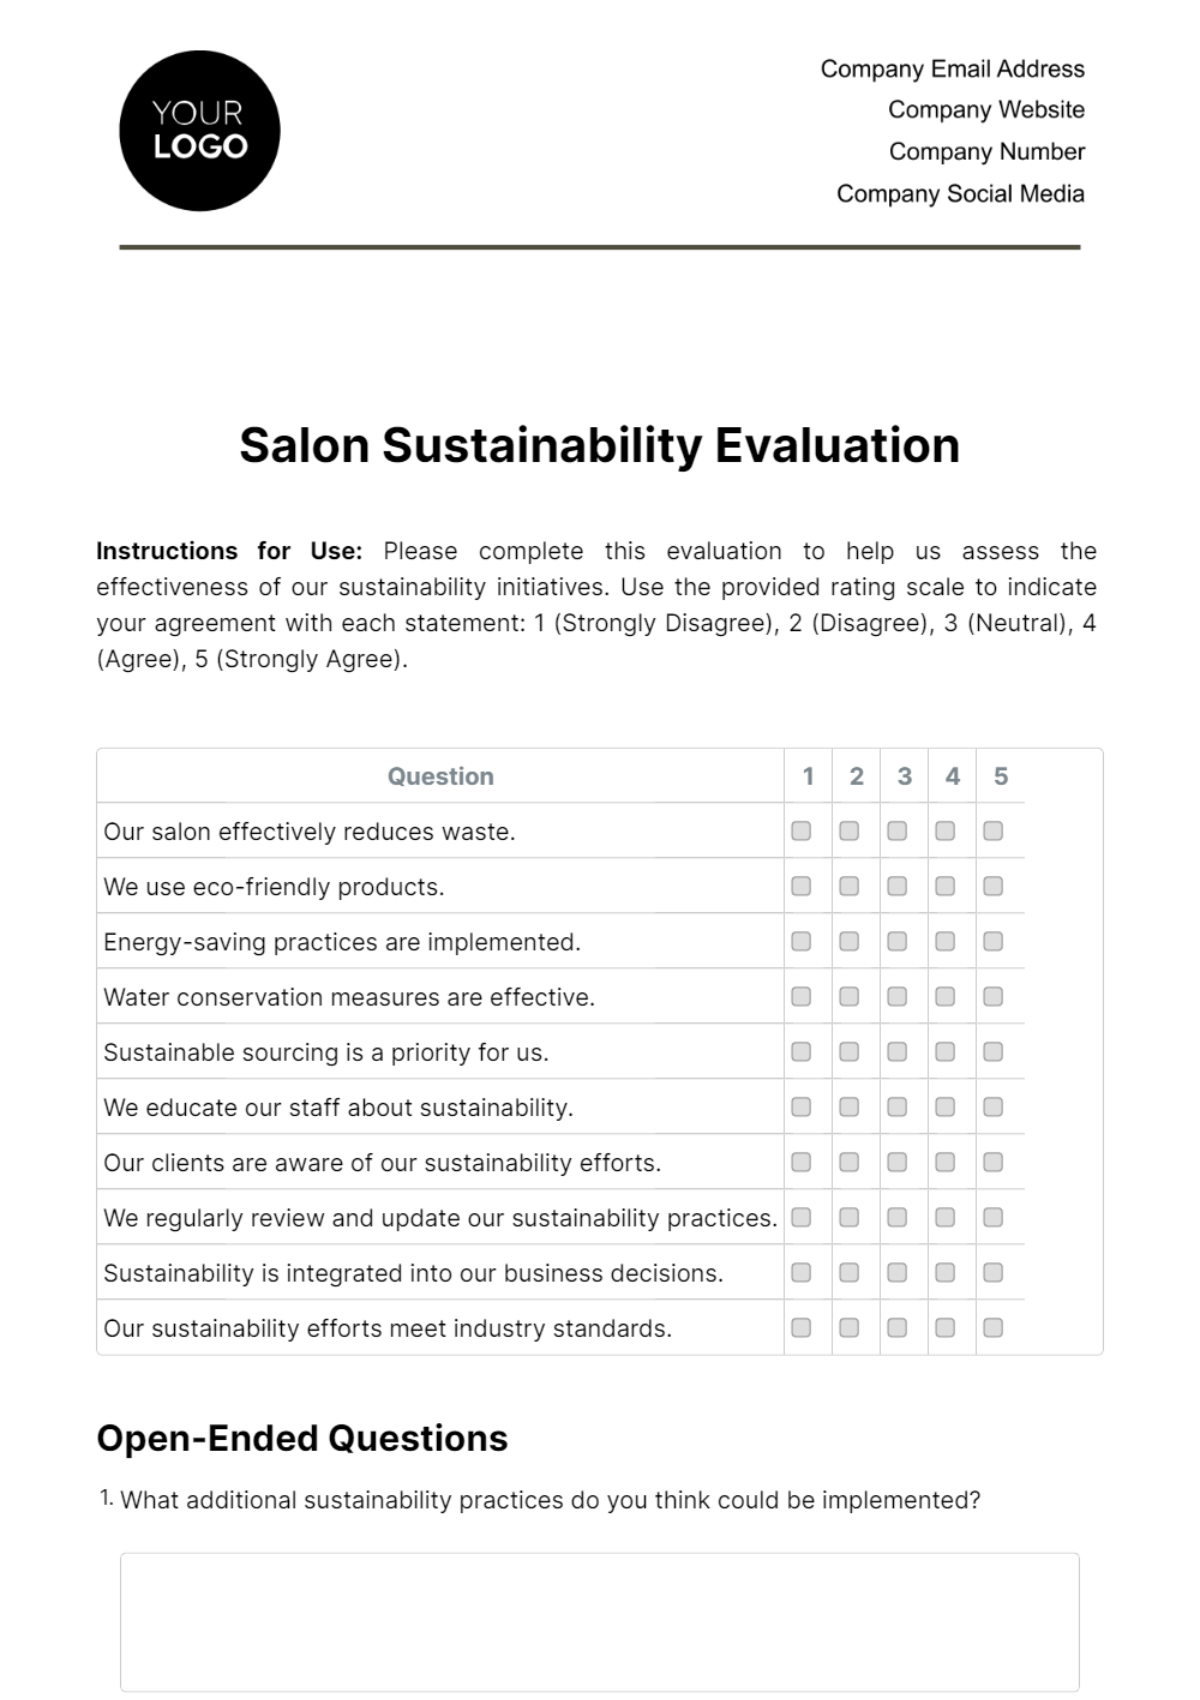 Salon Sustainability Evaluation Template